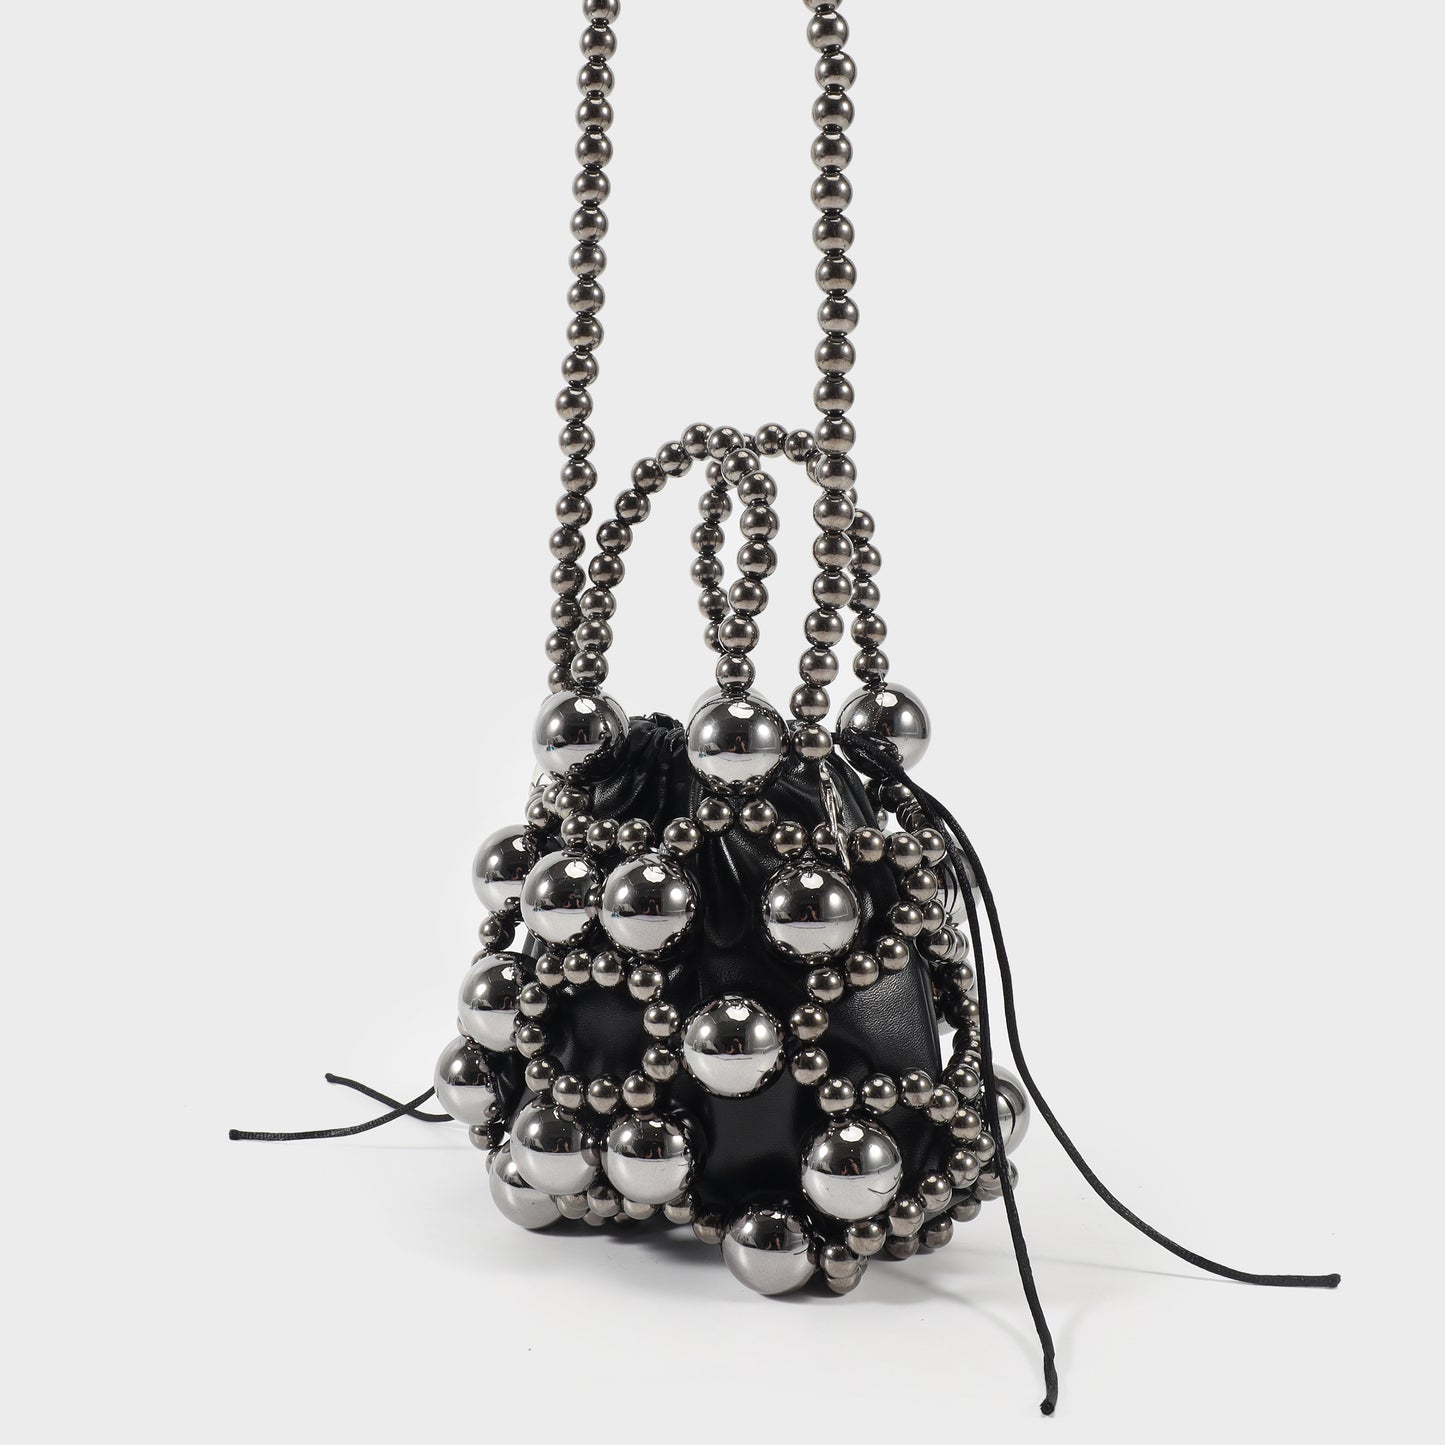 Handbag with pearls and internal fabric